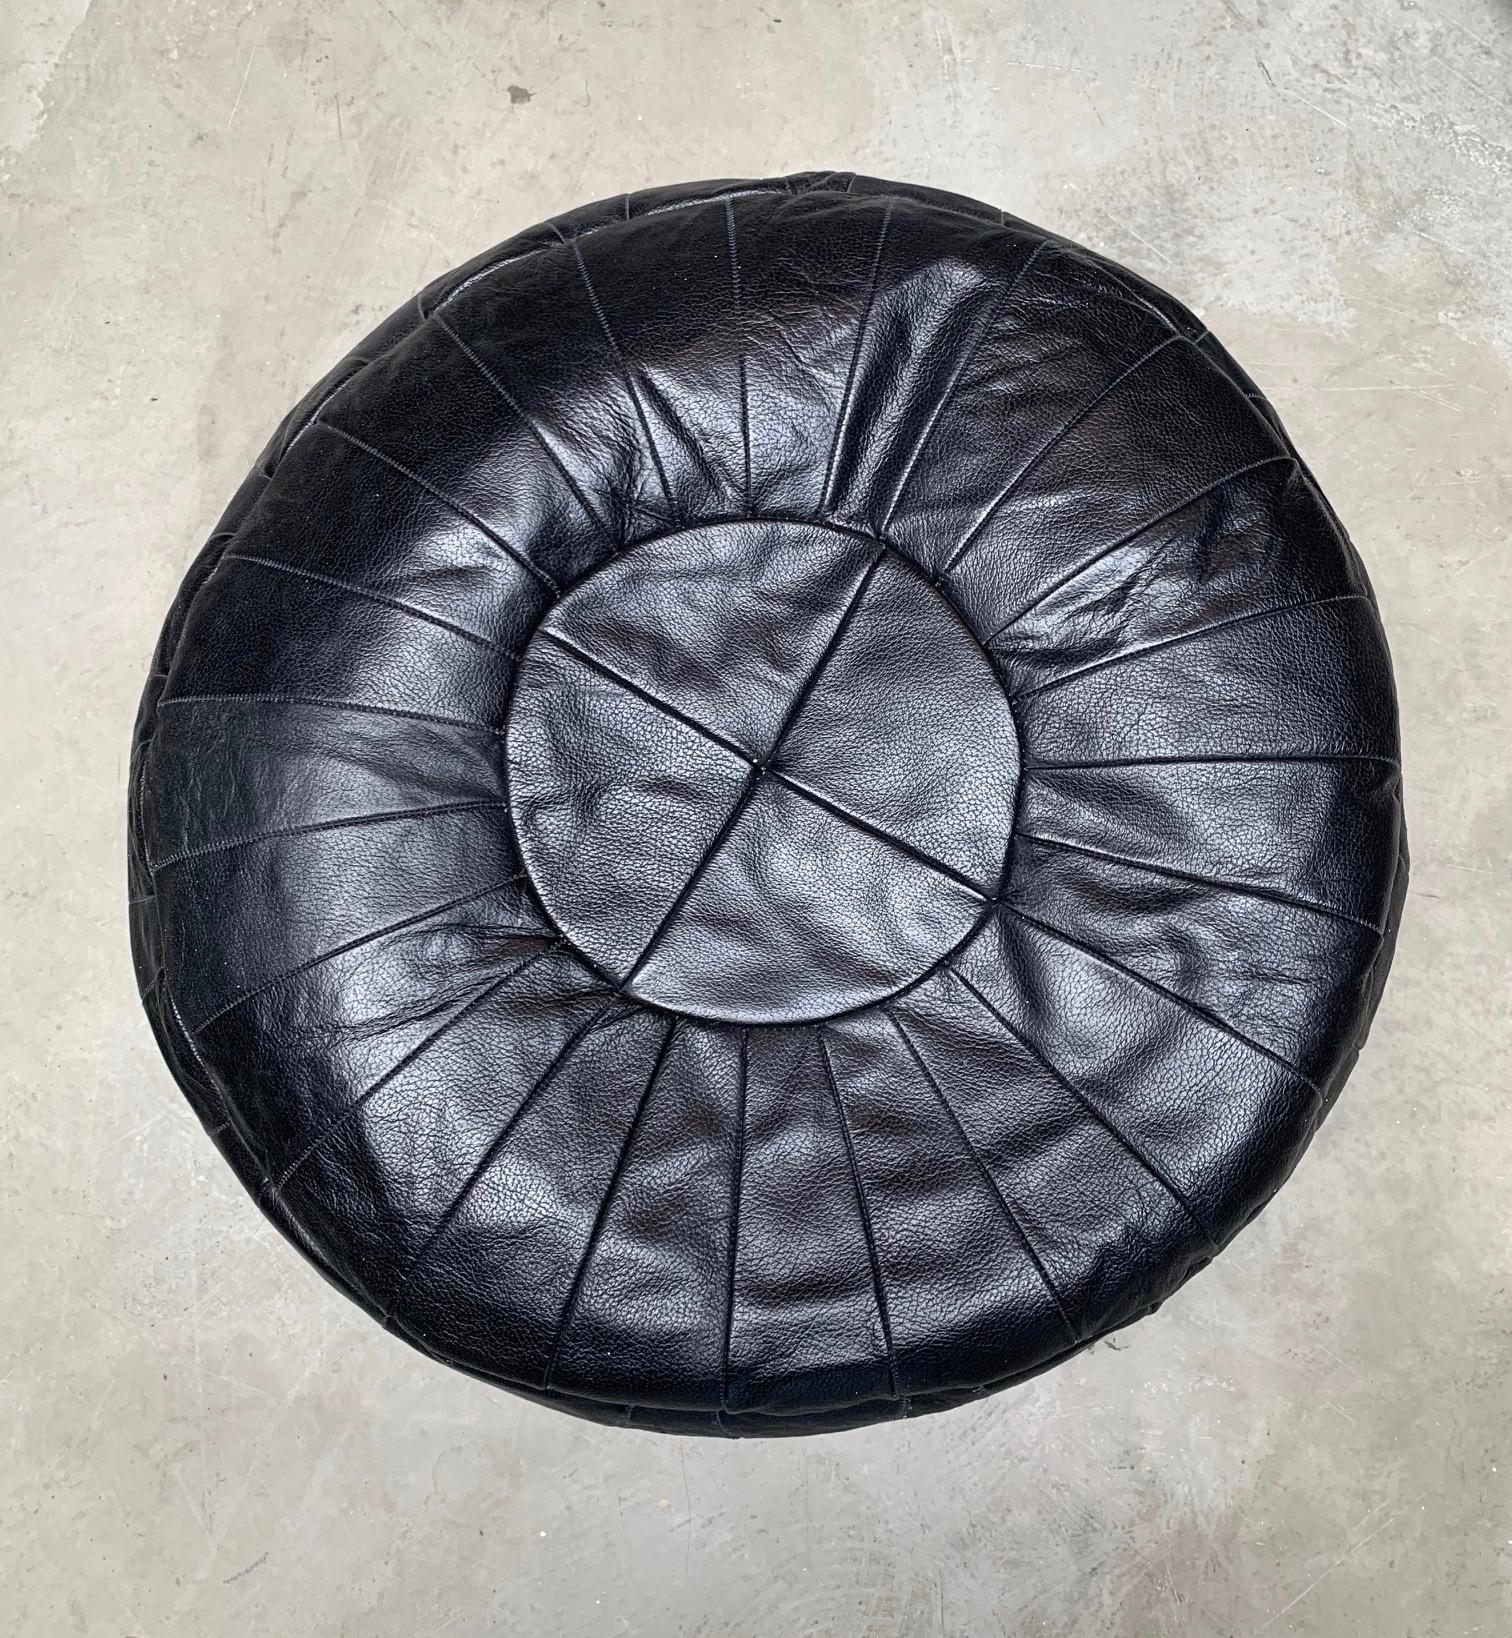 Swiss De Sede Patchwork Black Leather Ottoman